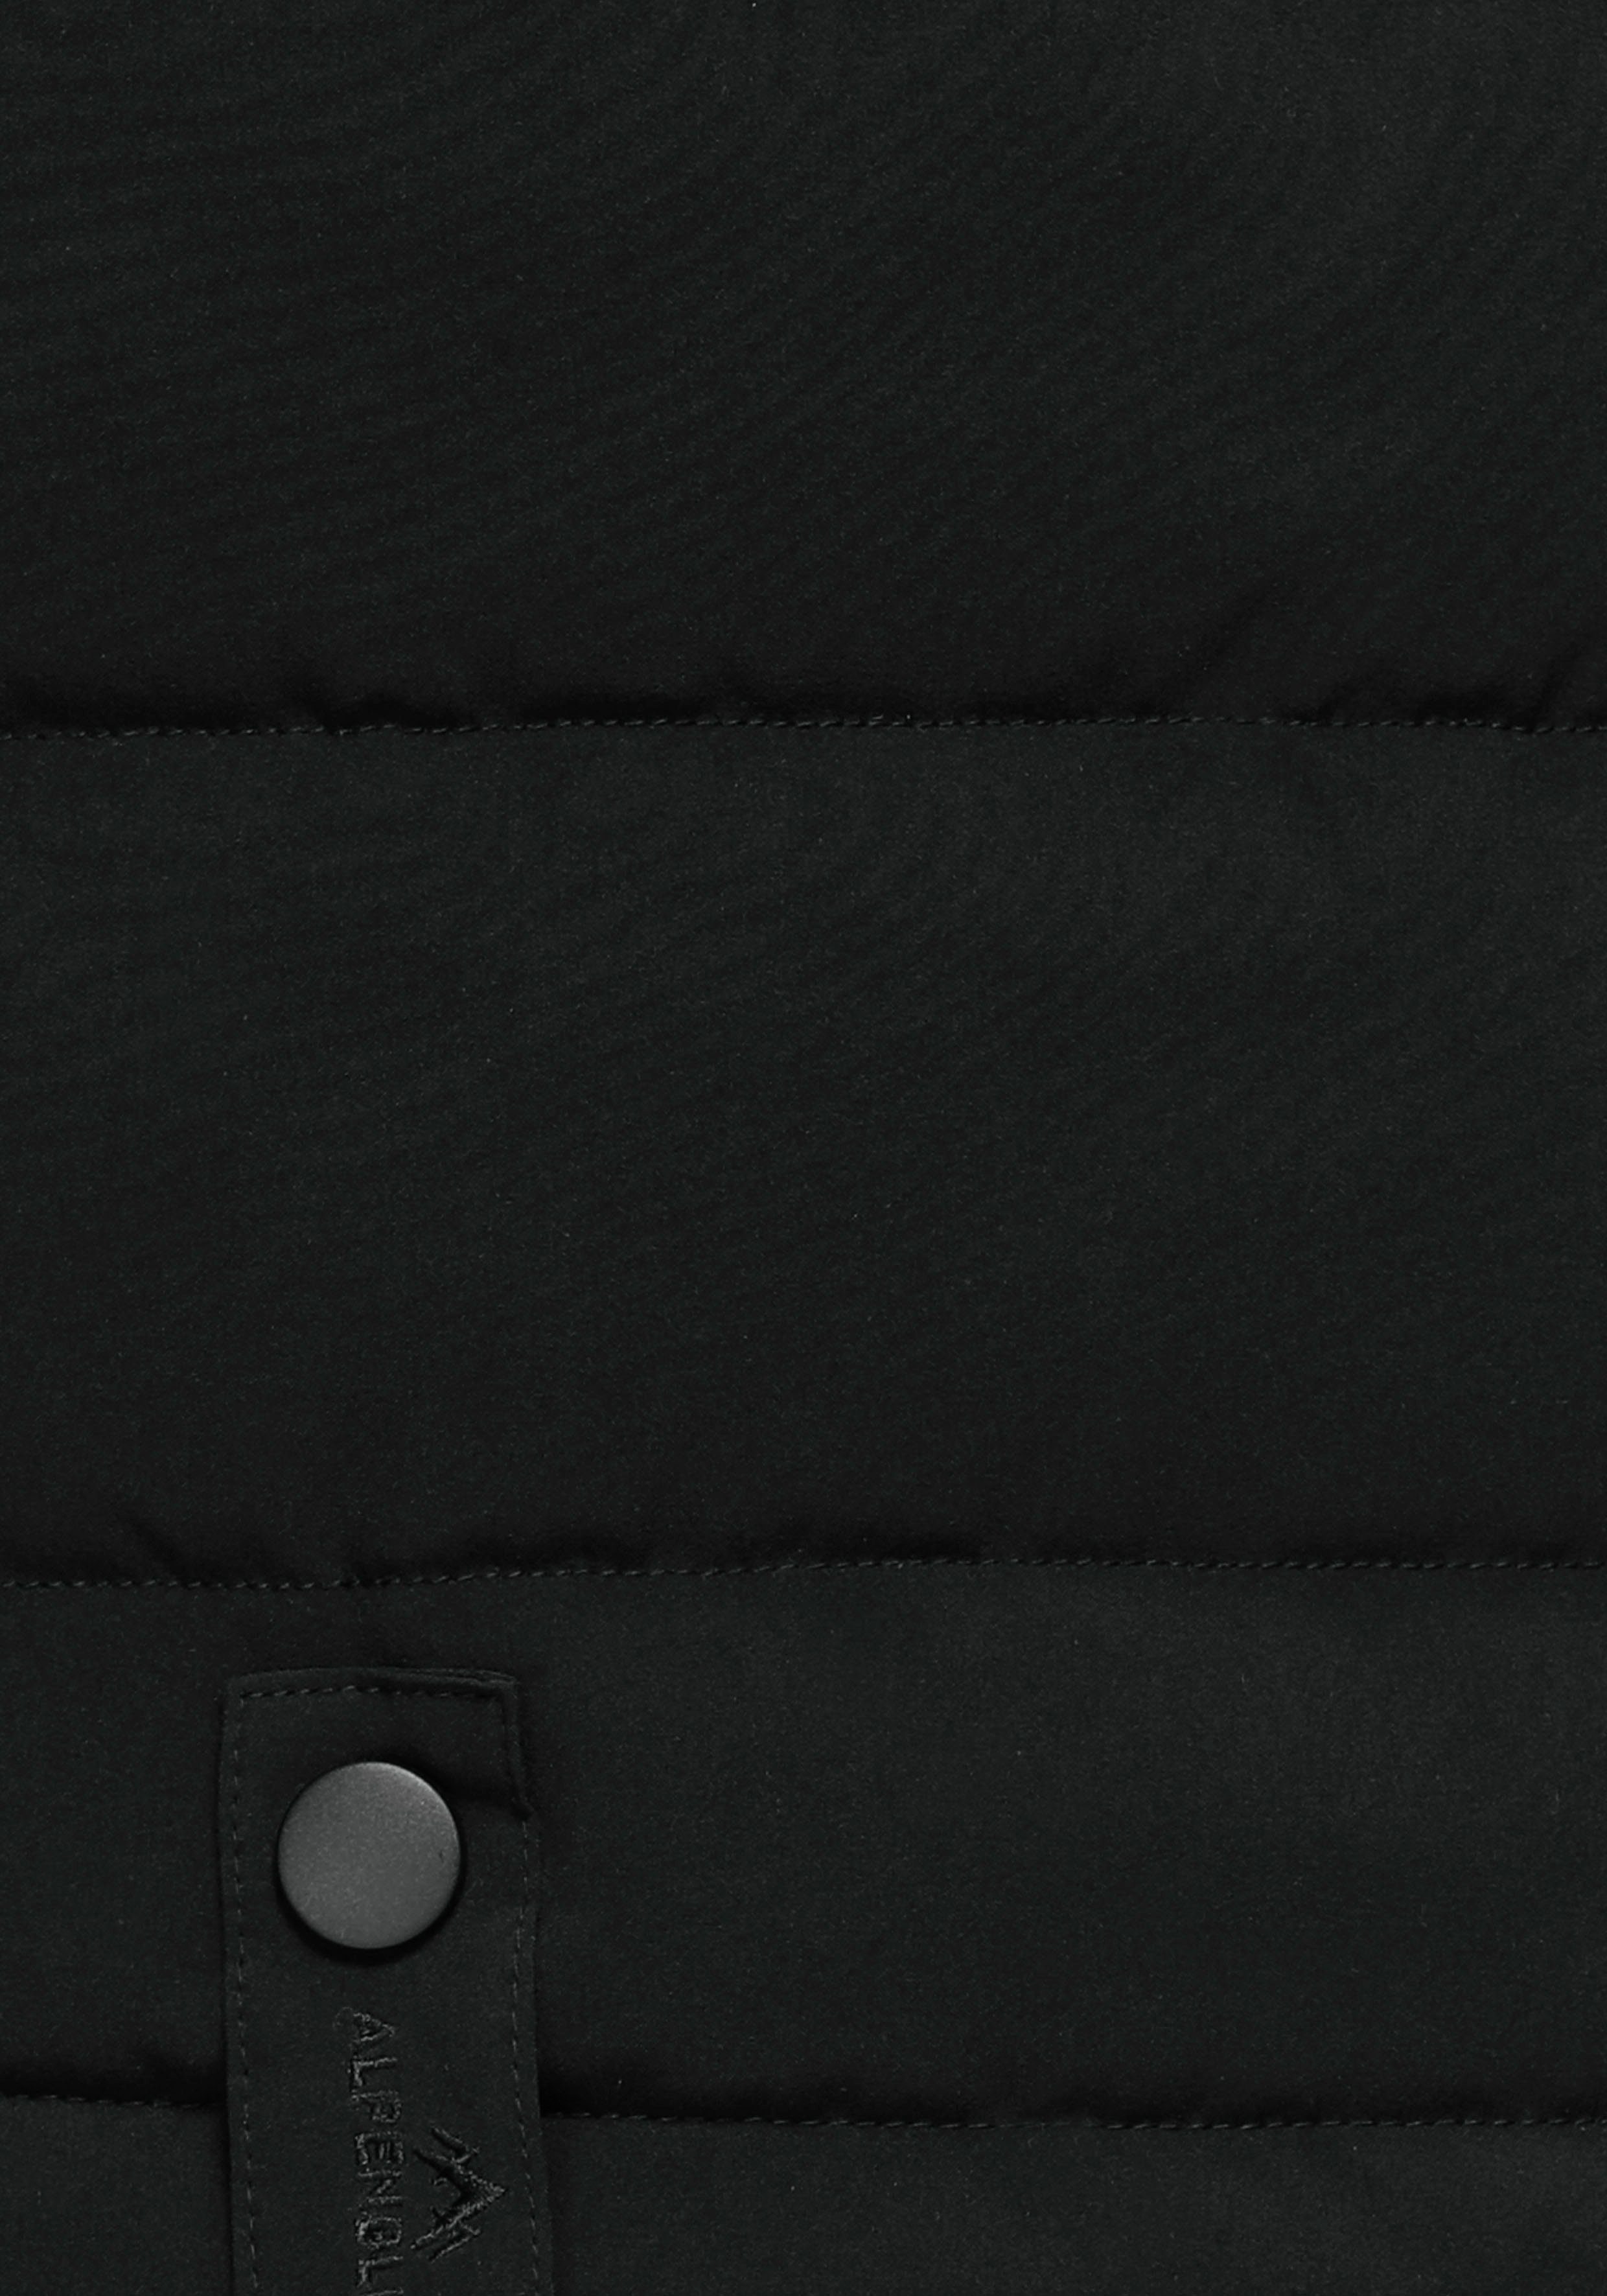 ALPENBLITZ Steppmantel Material) nachhaltigem Kuschel-Kapuze abnehmbarer Gürtel & aus long (Jacke dem Mantel black Oslo Markenprägung auf mit